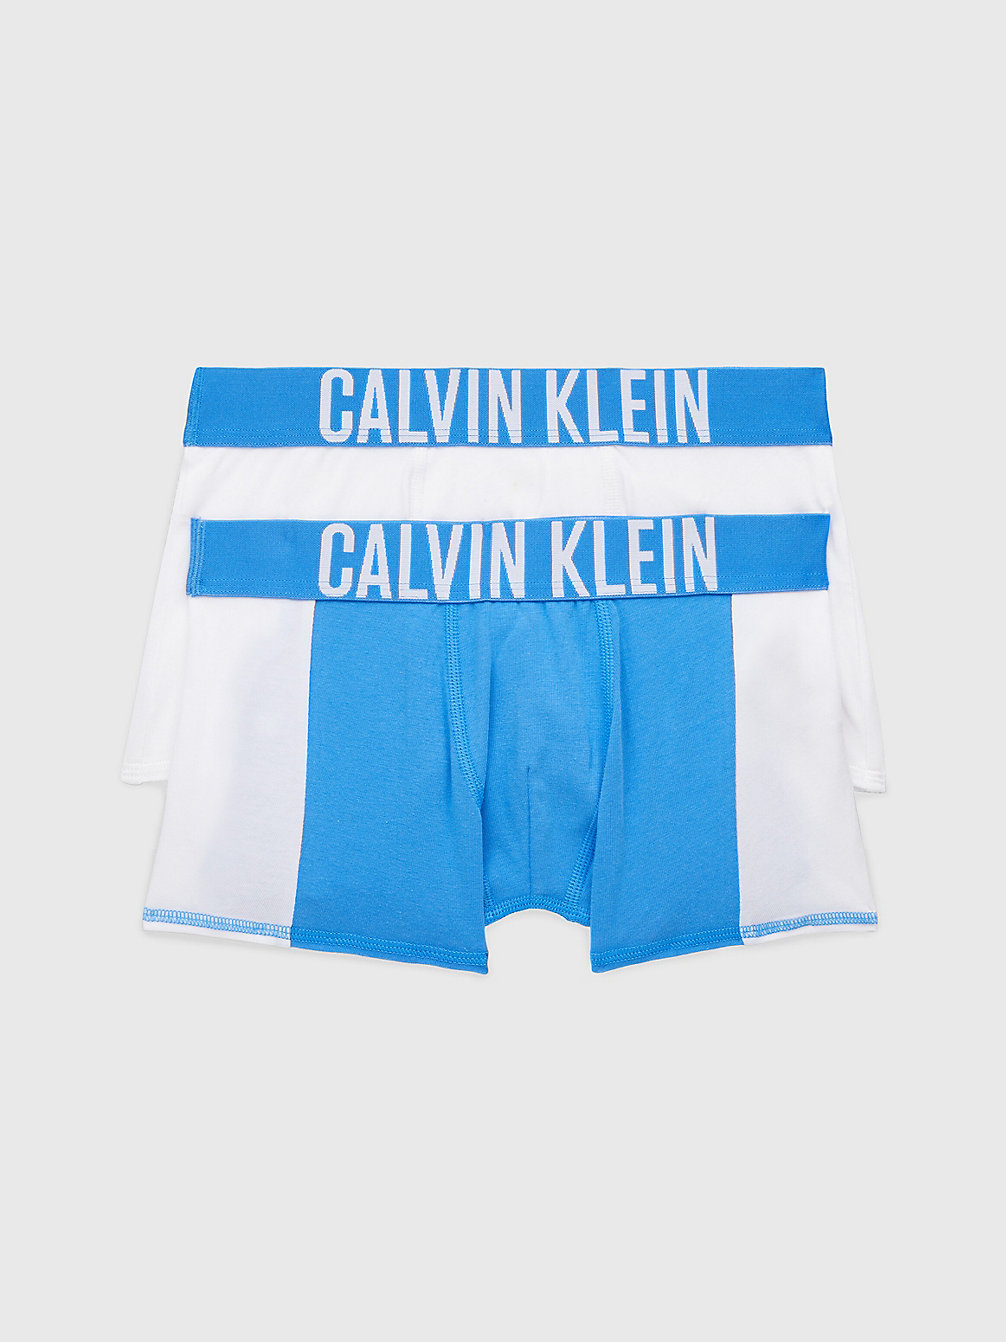 ELECTRICAQUA/PVHWHITE Lot De 2 Boxers Pour Garçon - Intense Power undefined boys Calvin Klein